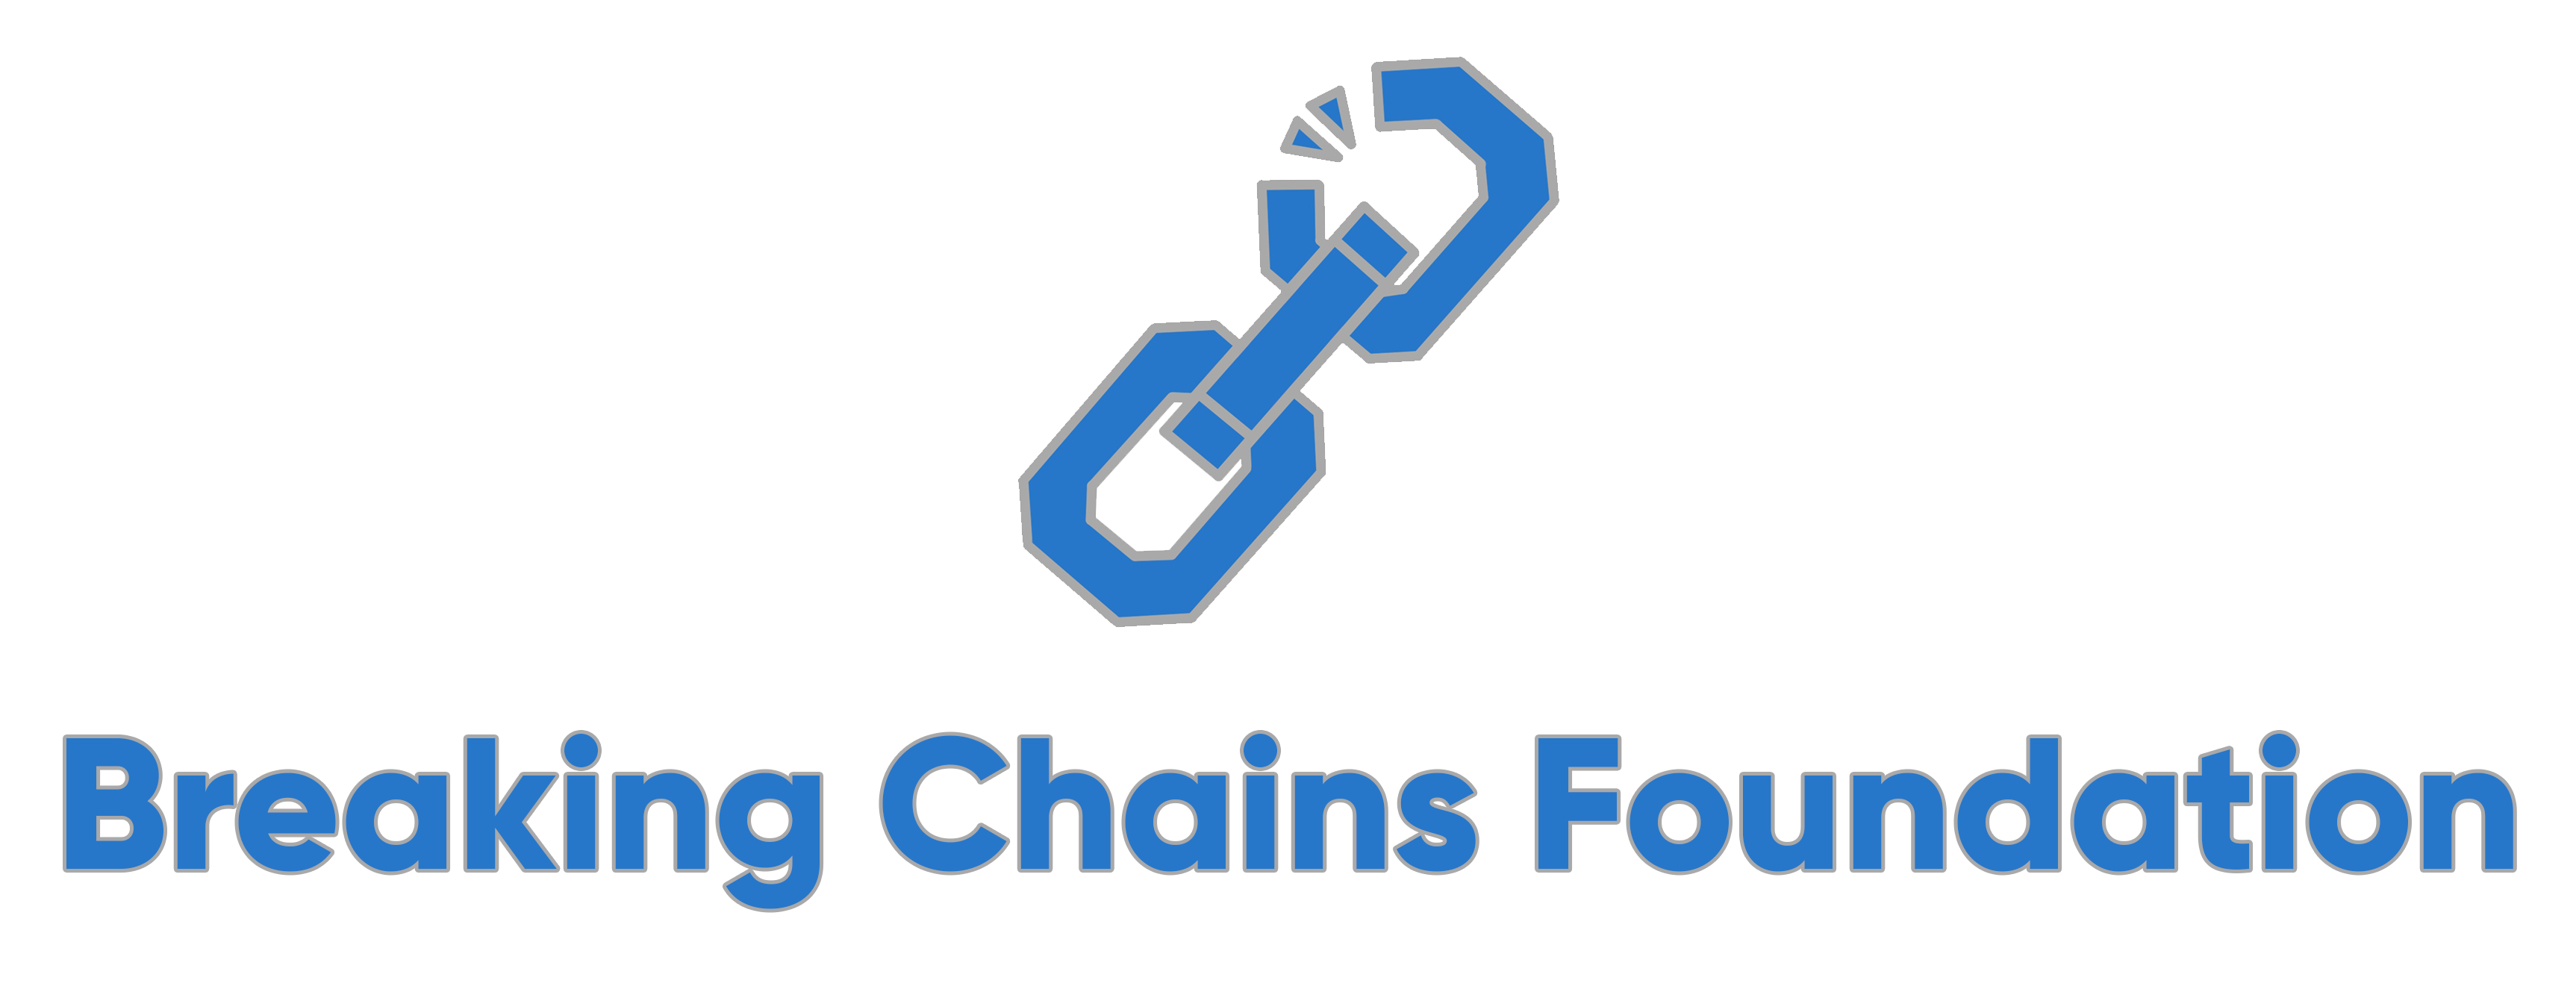 Breaking Chains Foundation logo